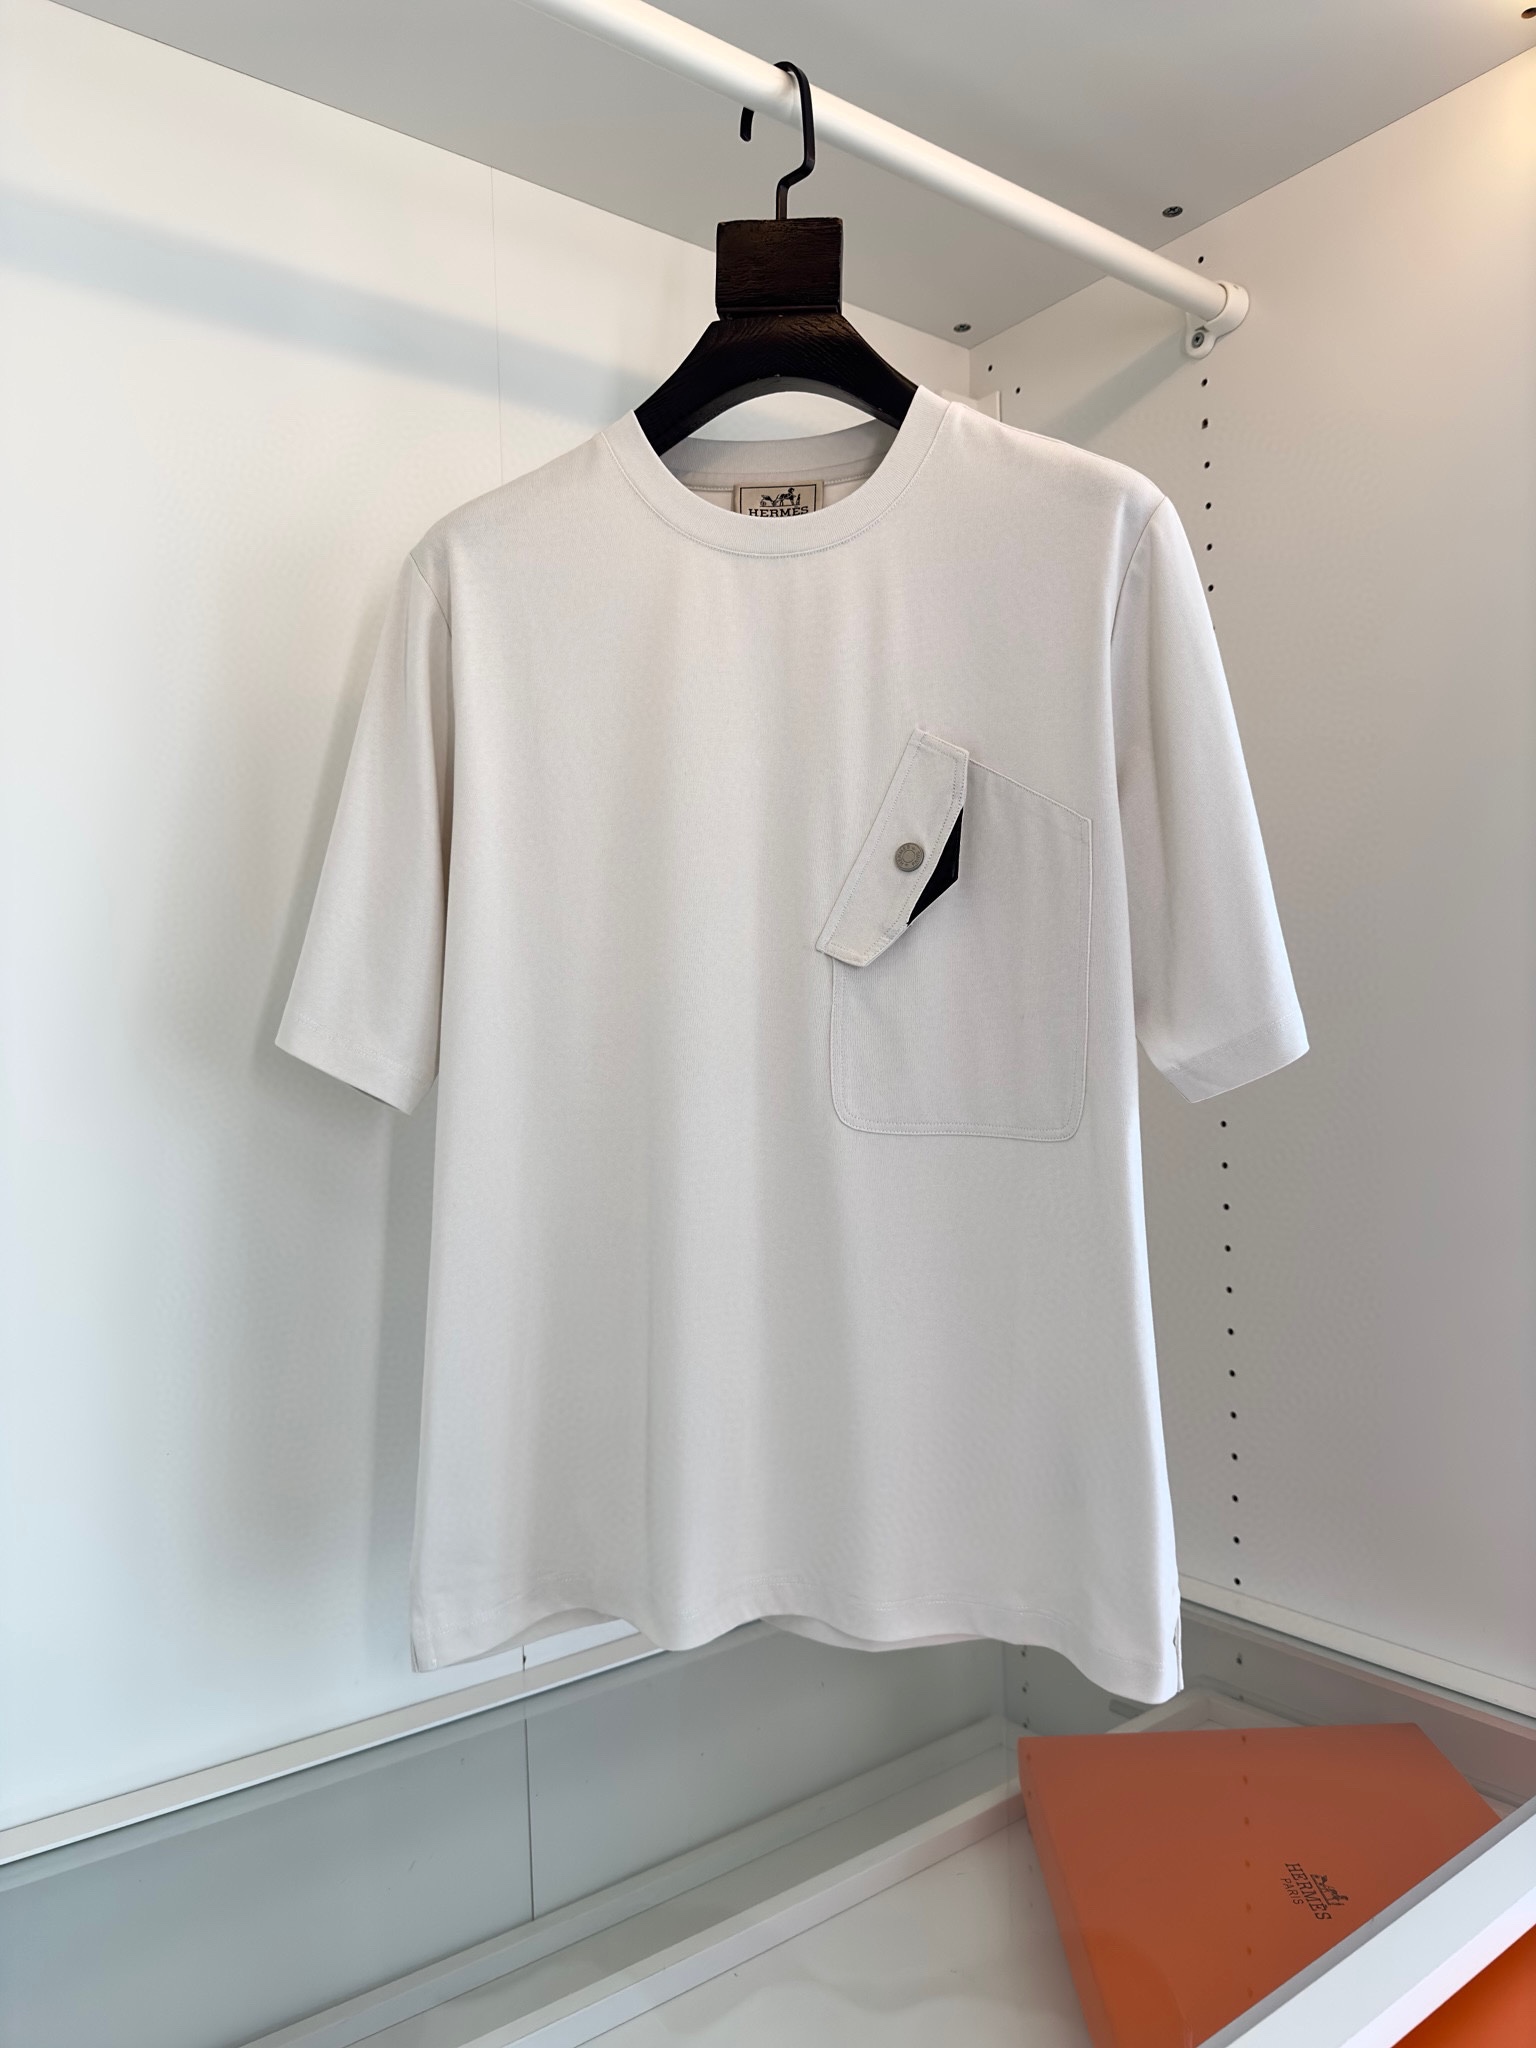 Hermes Clothing T-Shirt Beige Green Orange White Cotton Spring/Summer Collection Fashion Short Sleeve